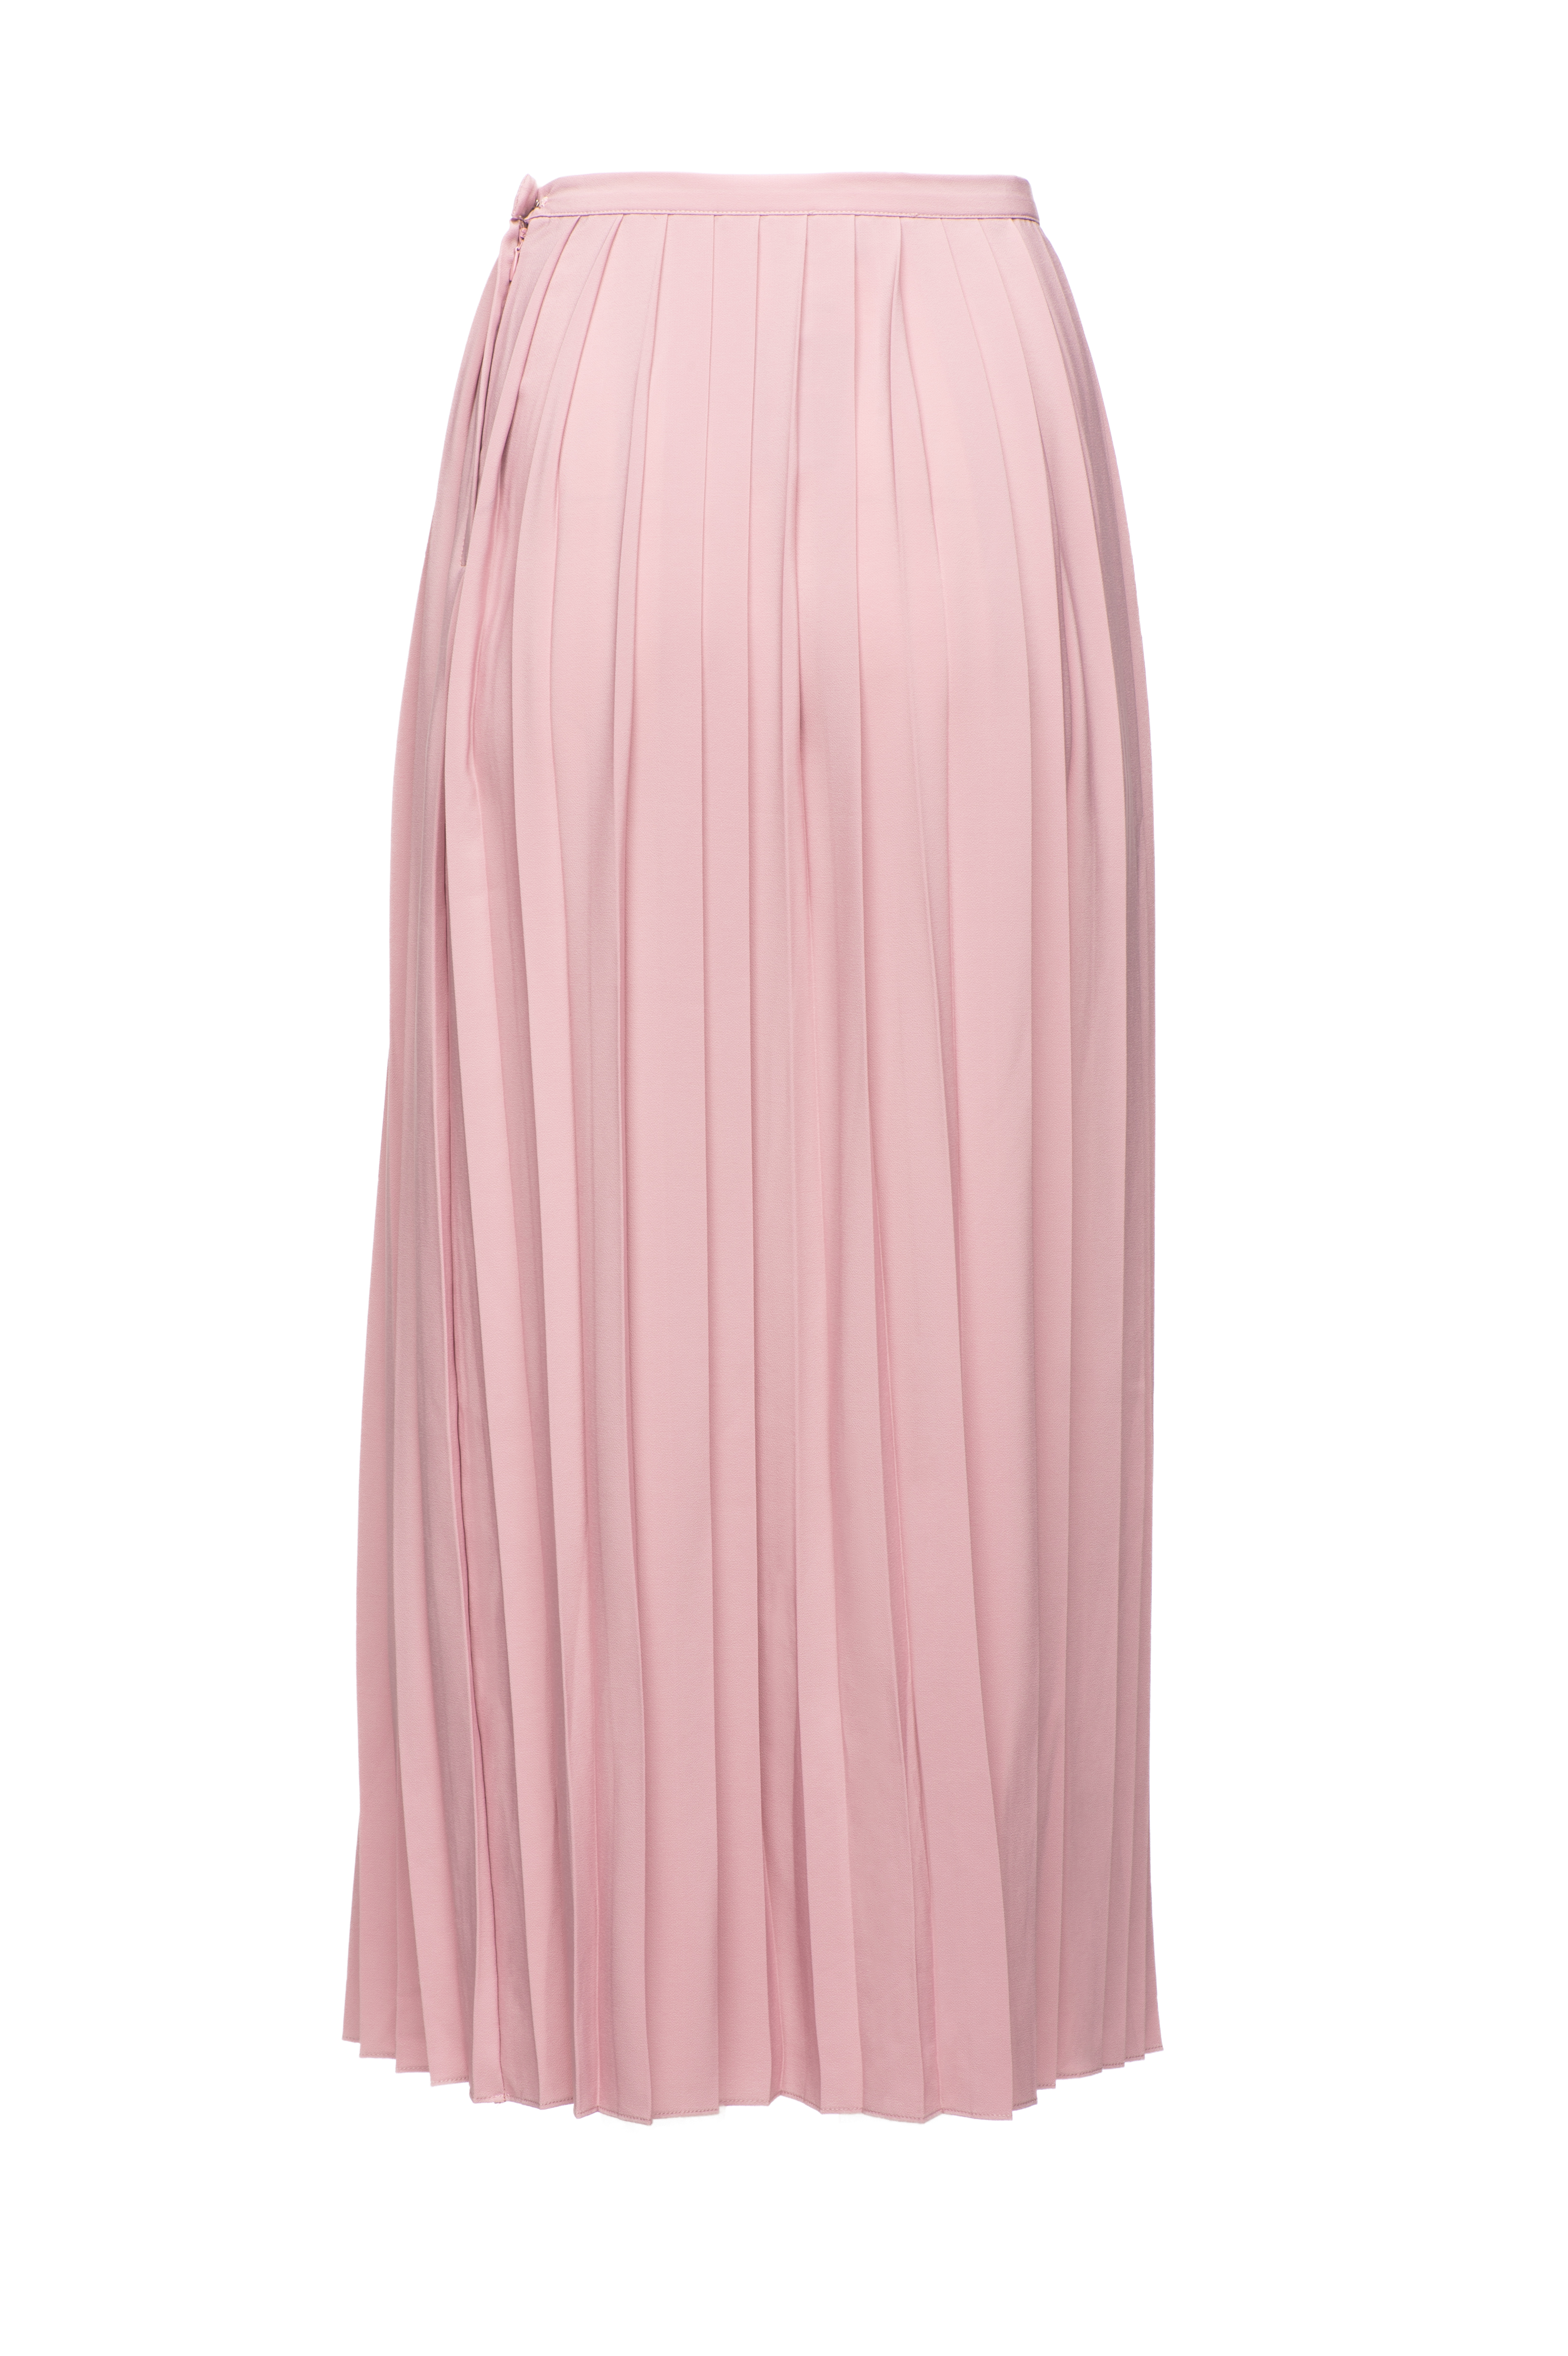 Mayada - Classic Pleated Skirt - Blush Rose